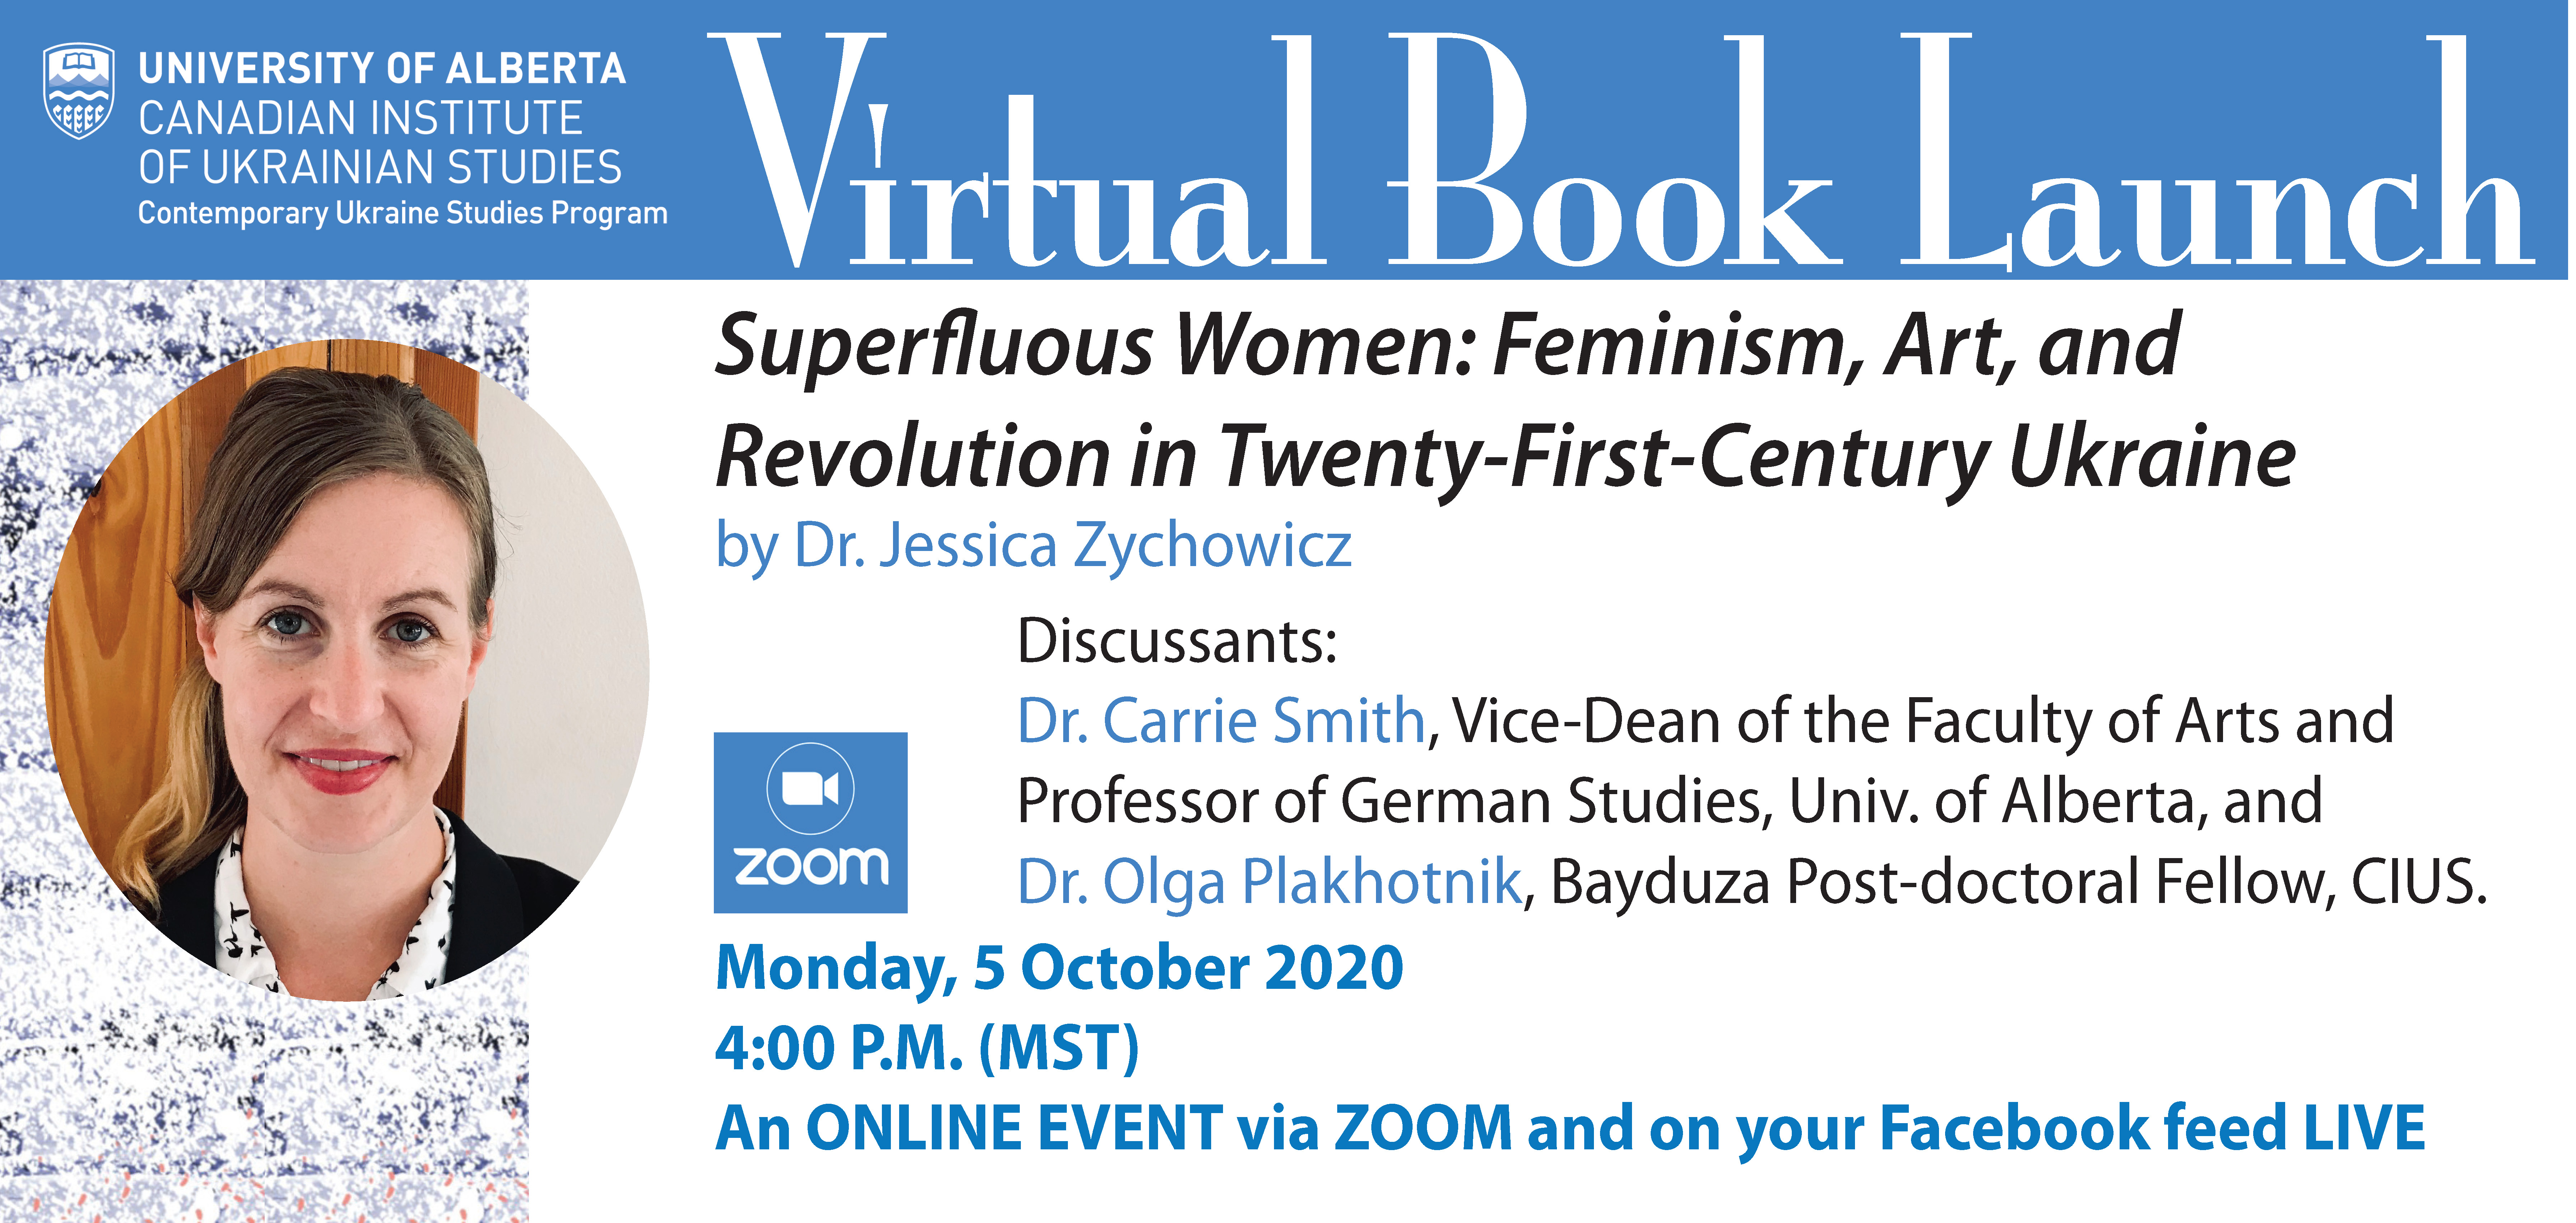 2020-10-05-book-launch-jessica-zychowicz-banner1.jpg